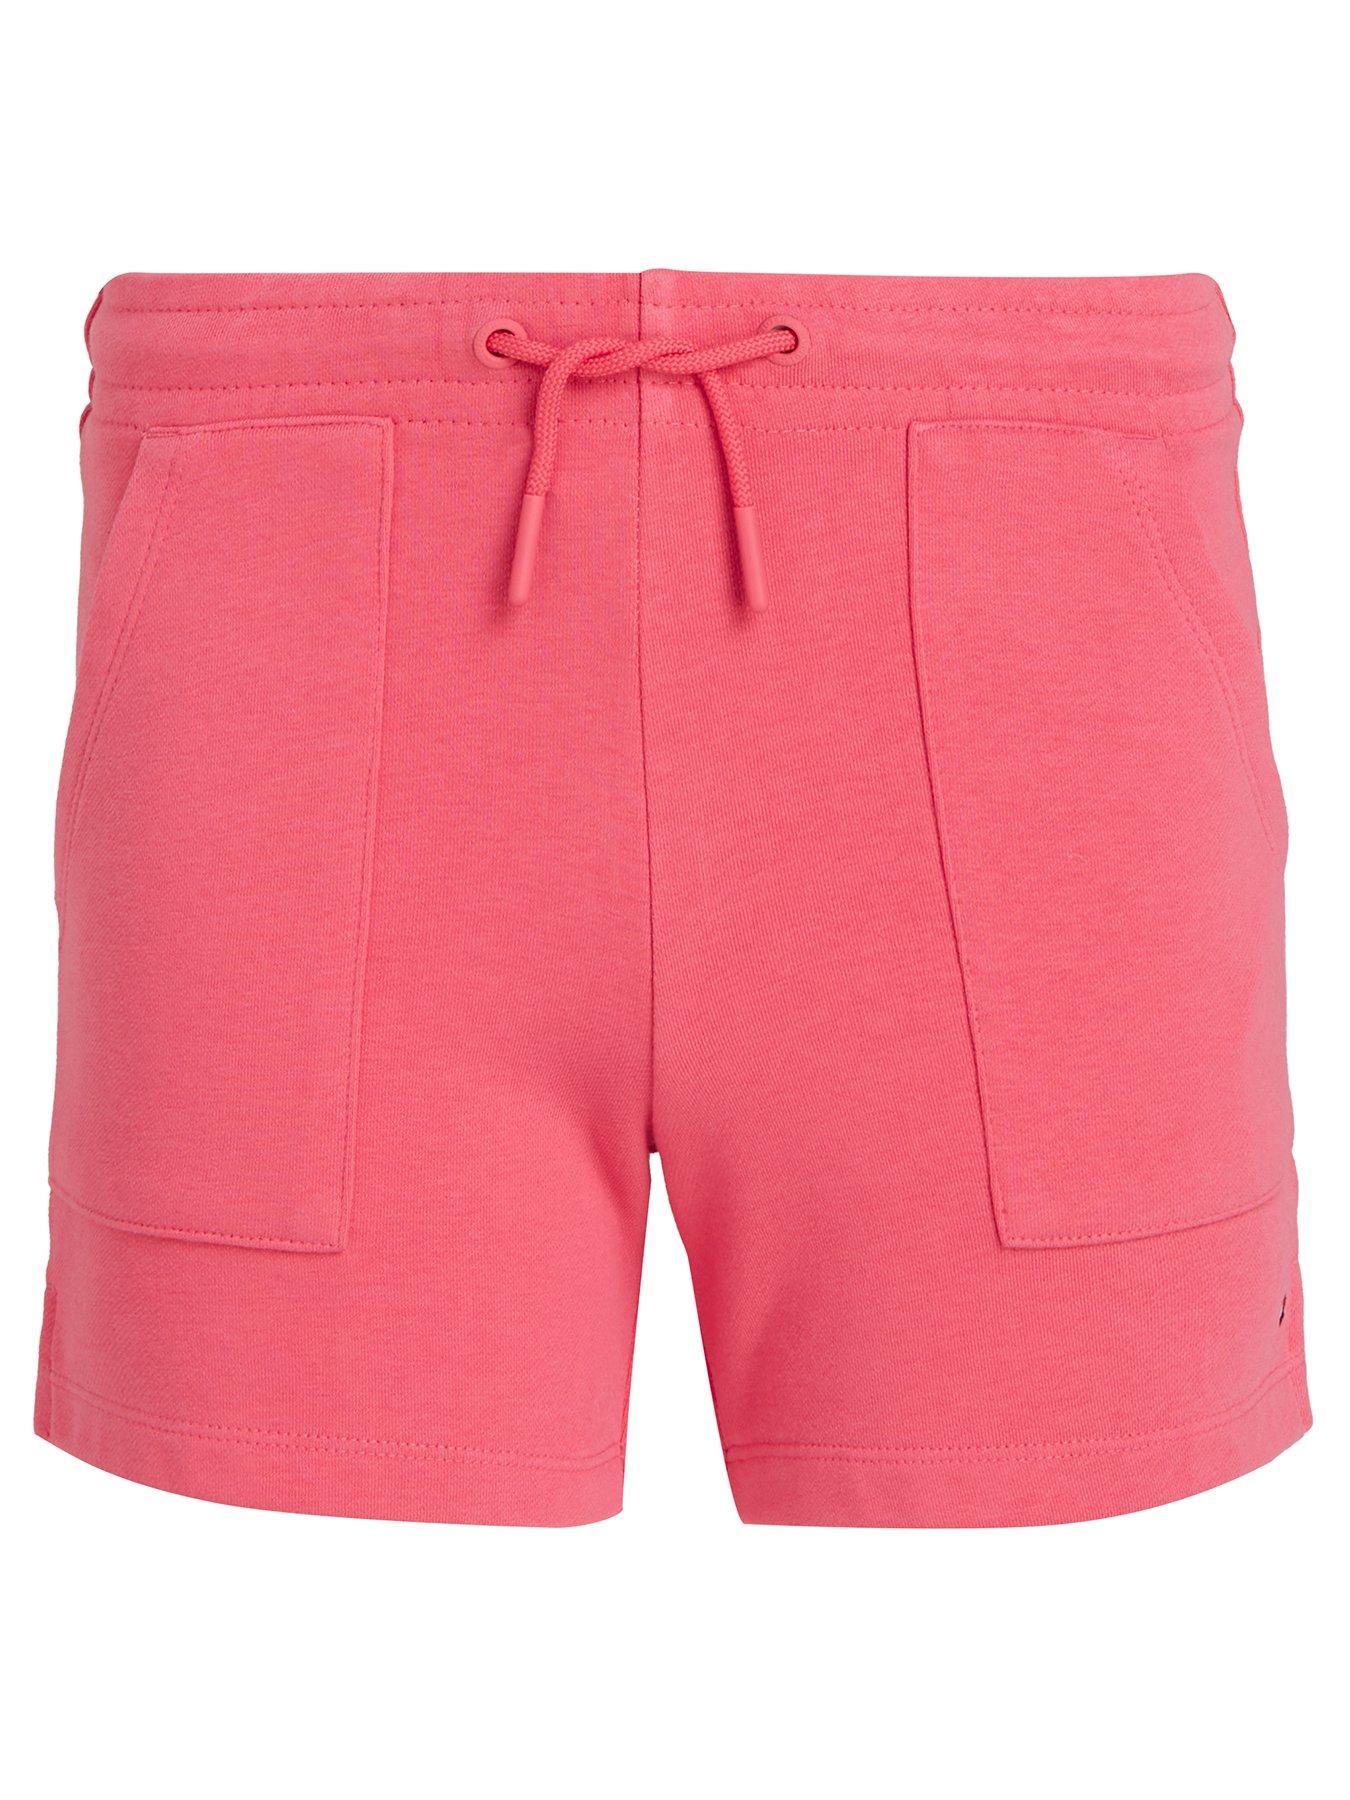 Victoria's Secret Pink 6 Cotton High Waist Biker Shorts, Women's